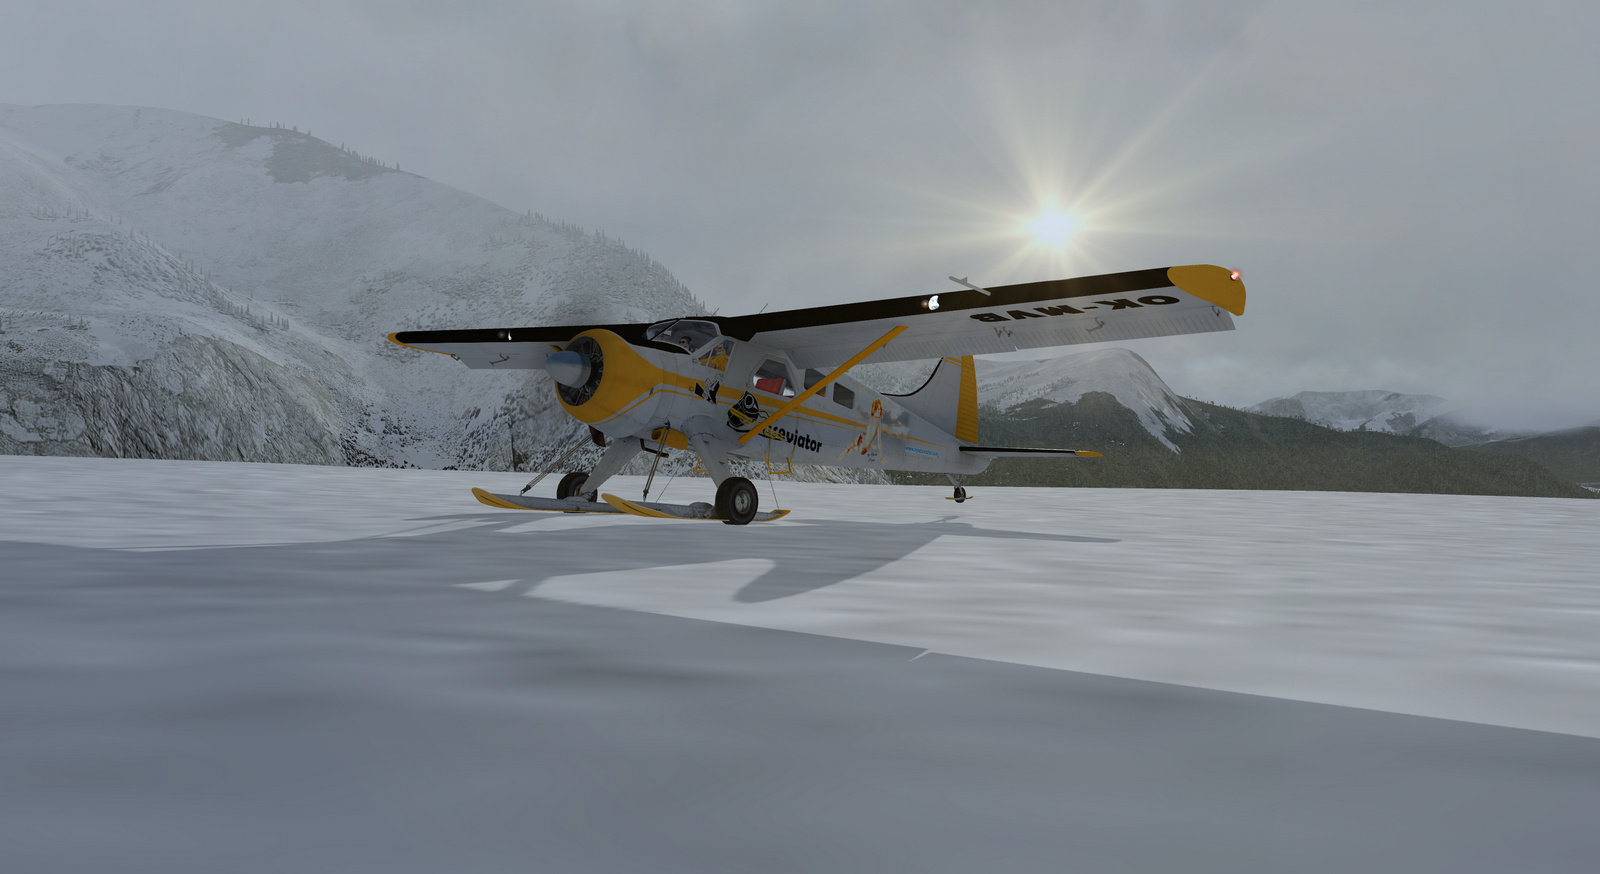 DHC-2 Beaver, Mouseviator,Skis version, Screenshot 17/19